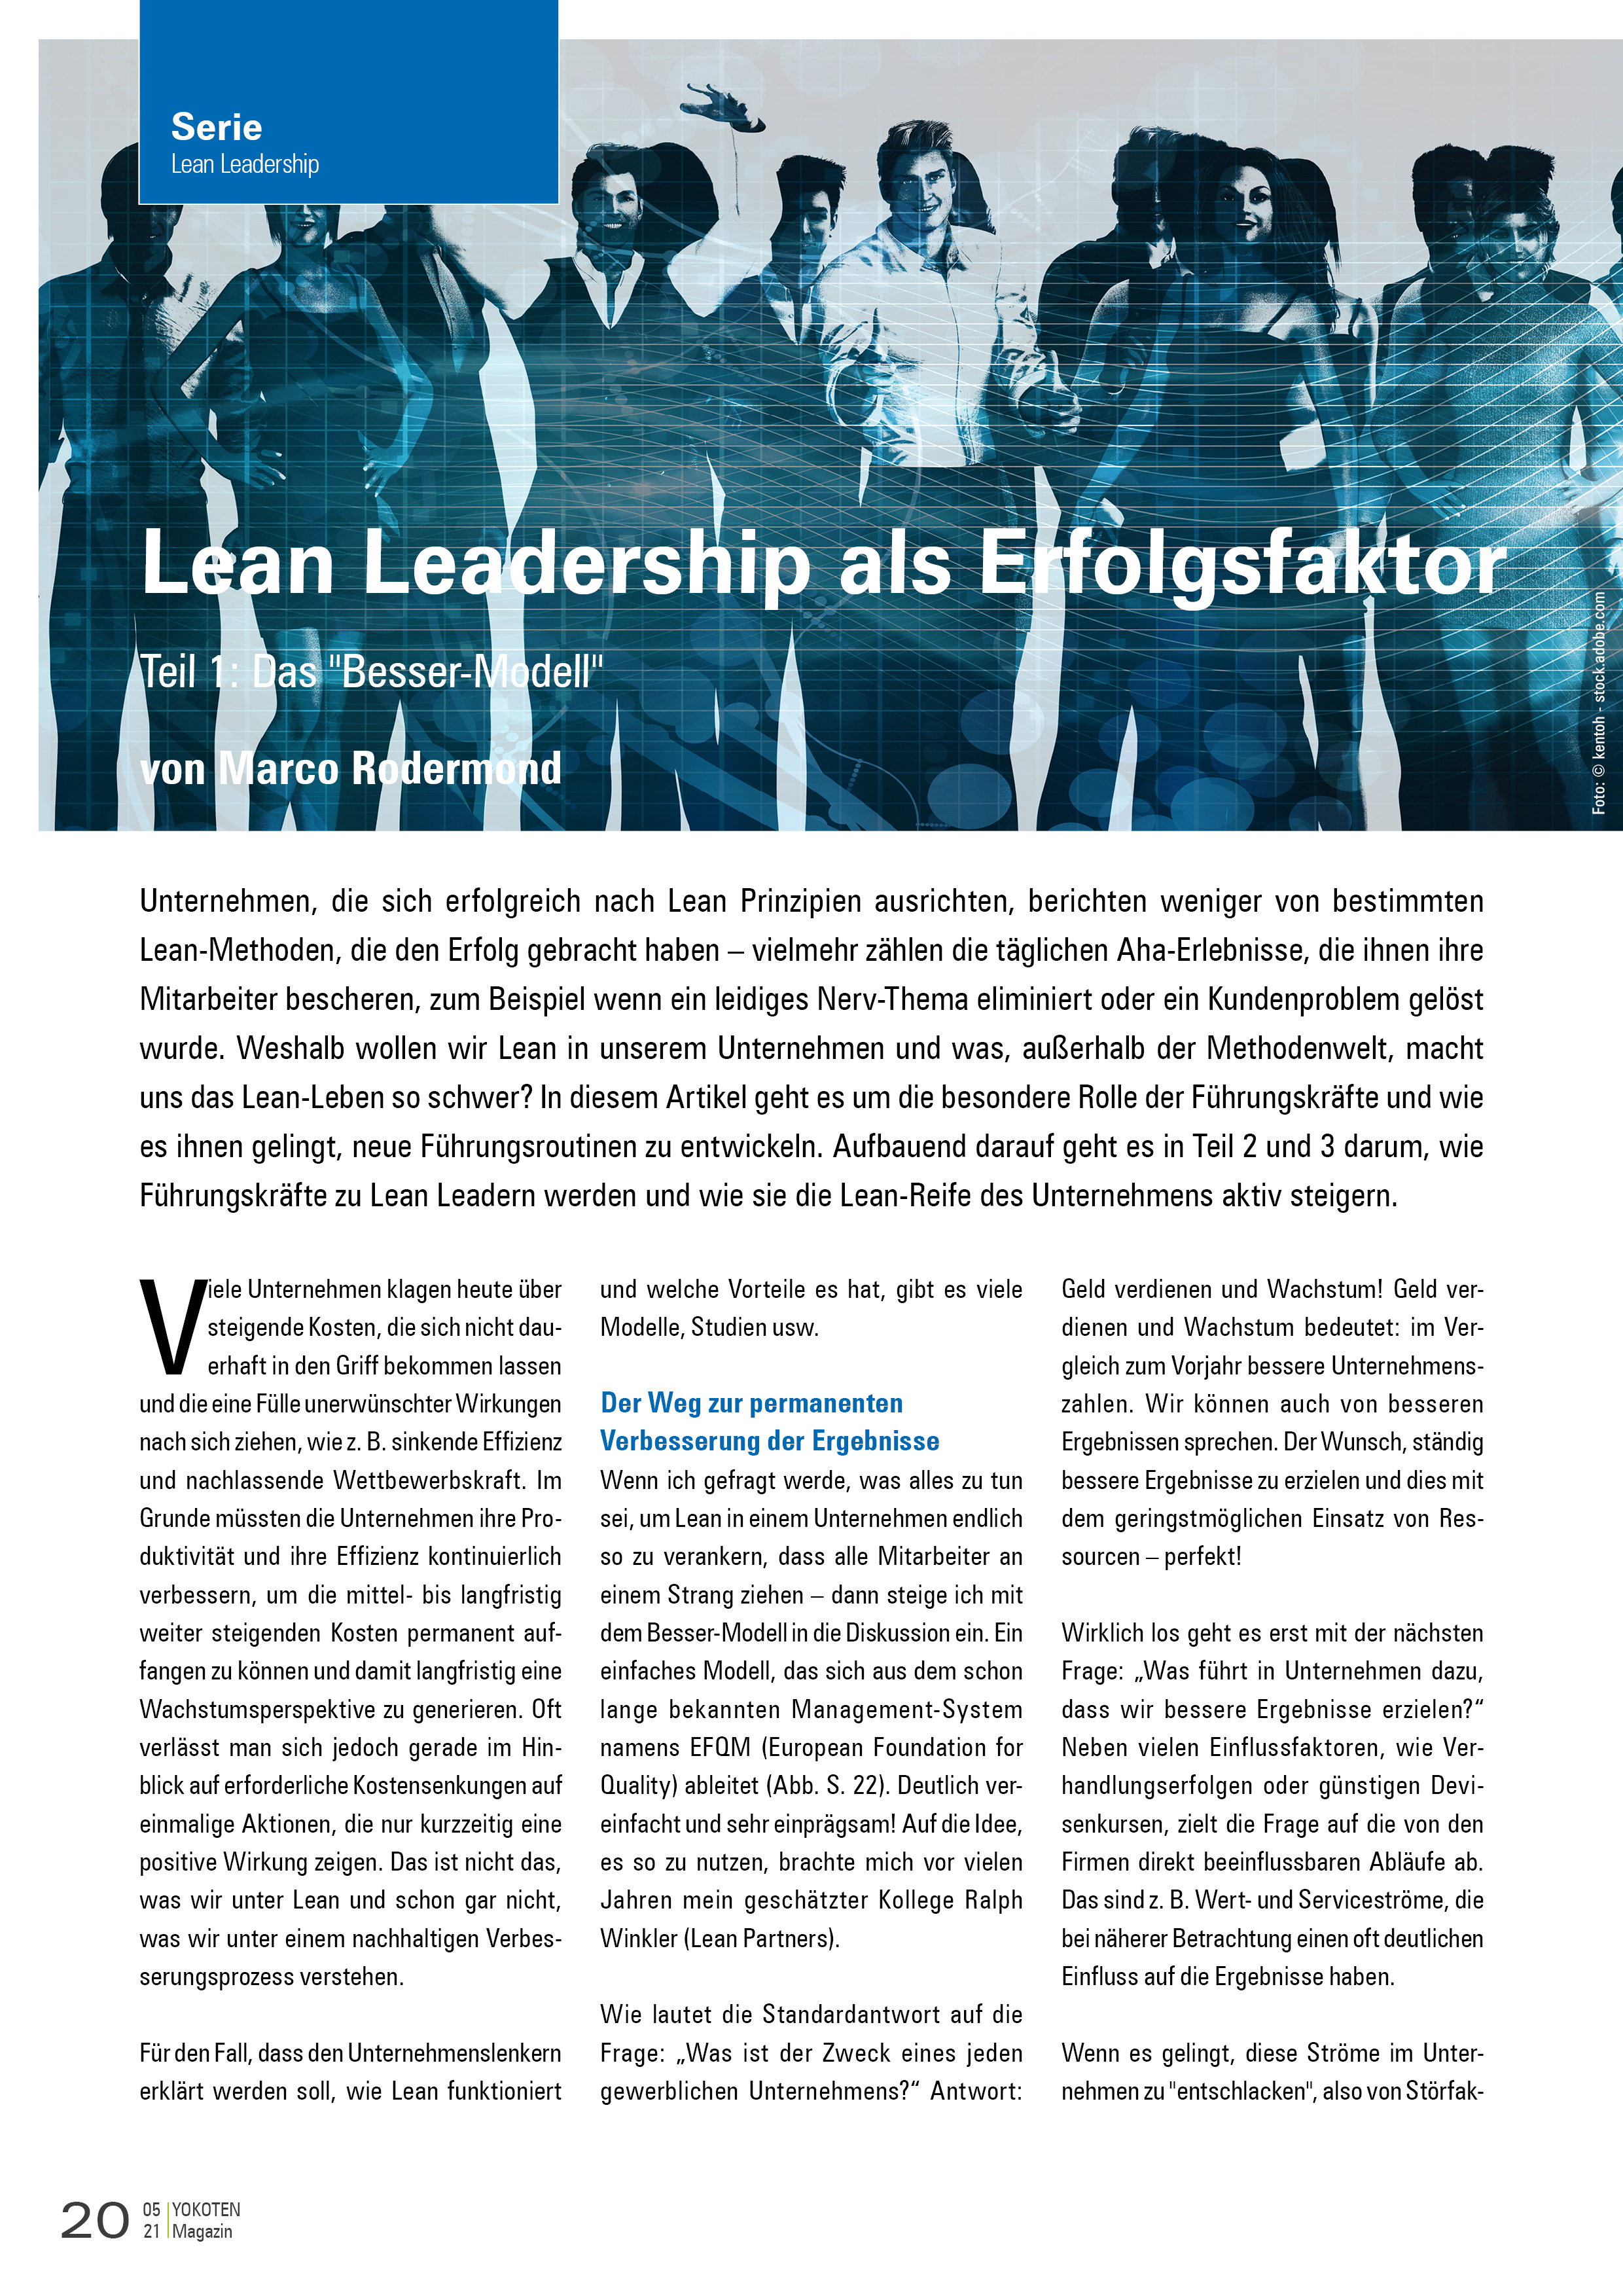 YOKOTEN-Artikel: Lean Leadership als Erfolgsfaktor 